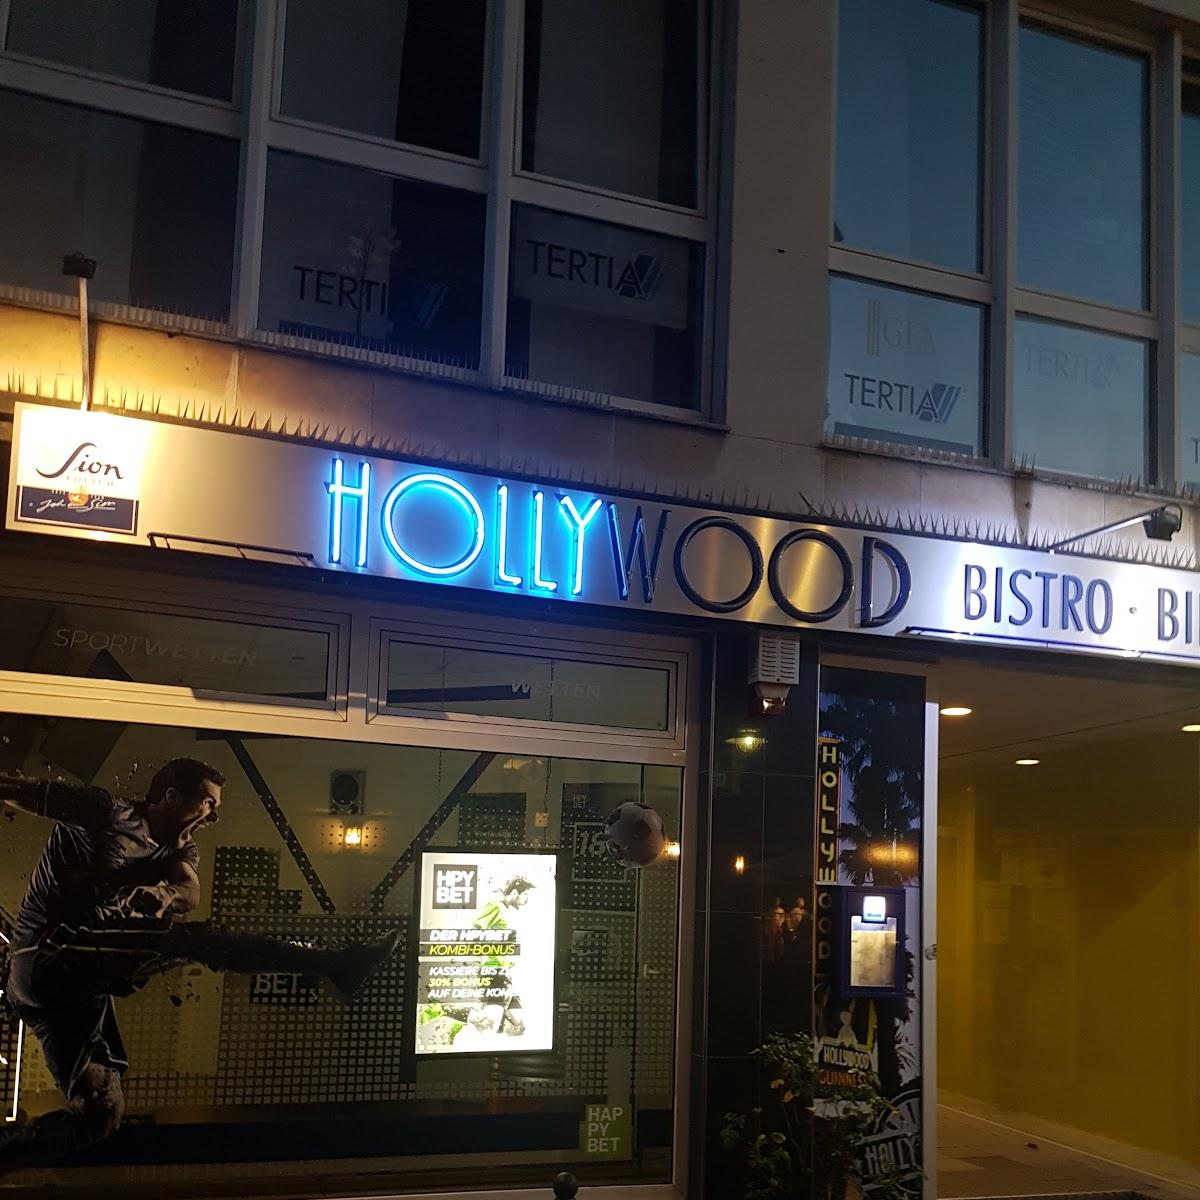 Restaurant "Bistro Hollywood" in Brühl